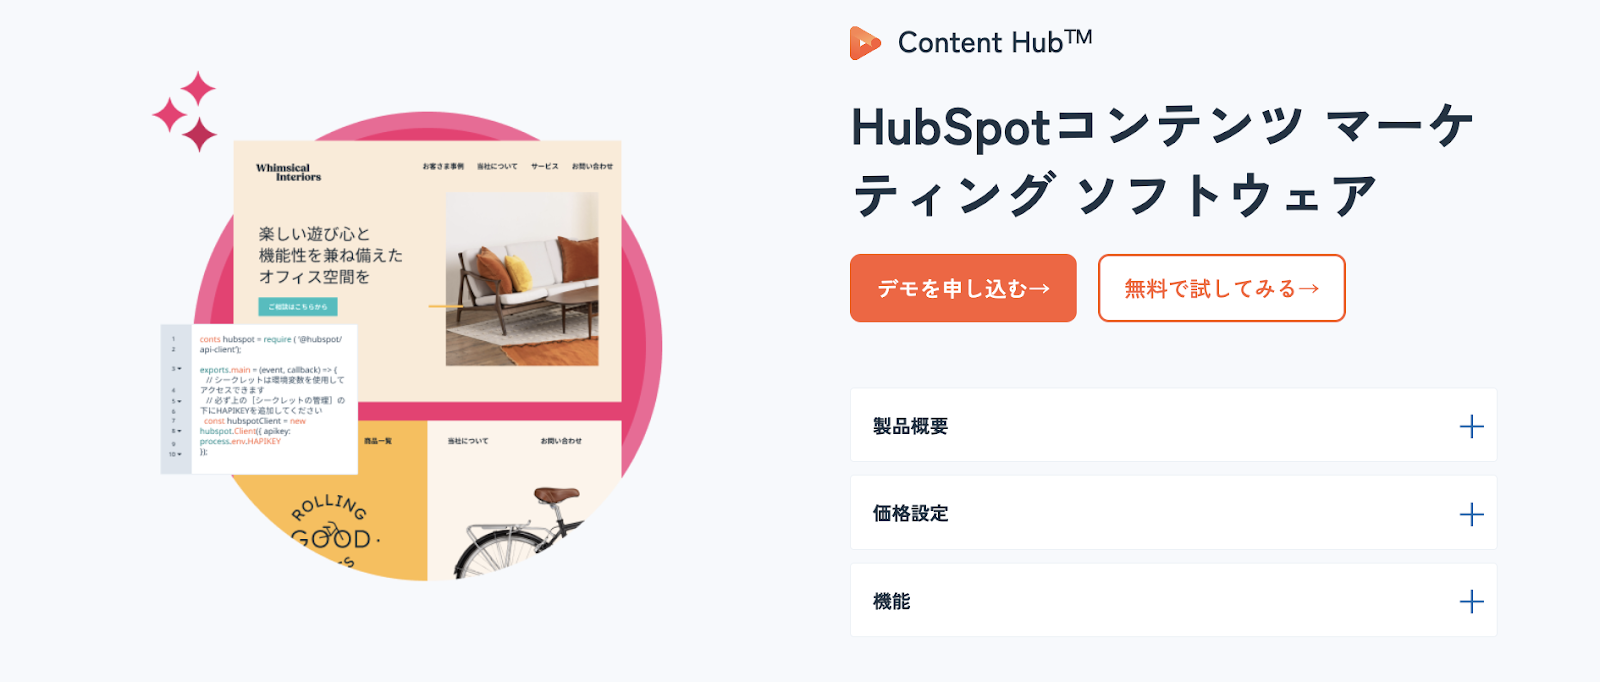 HubSpot CMS機能を搭載するContent Hub